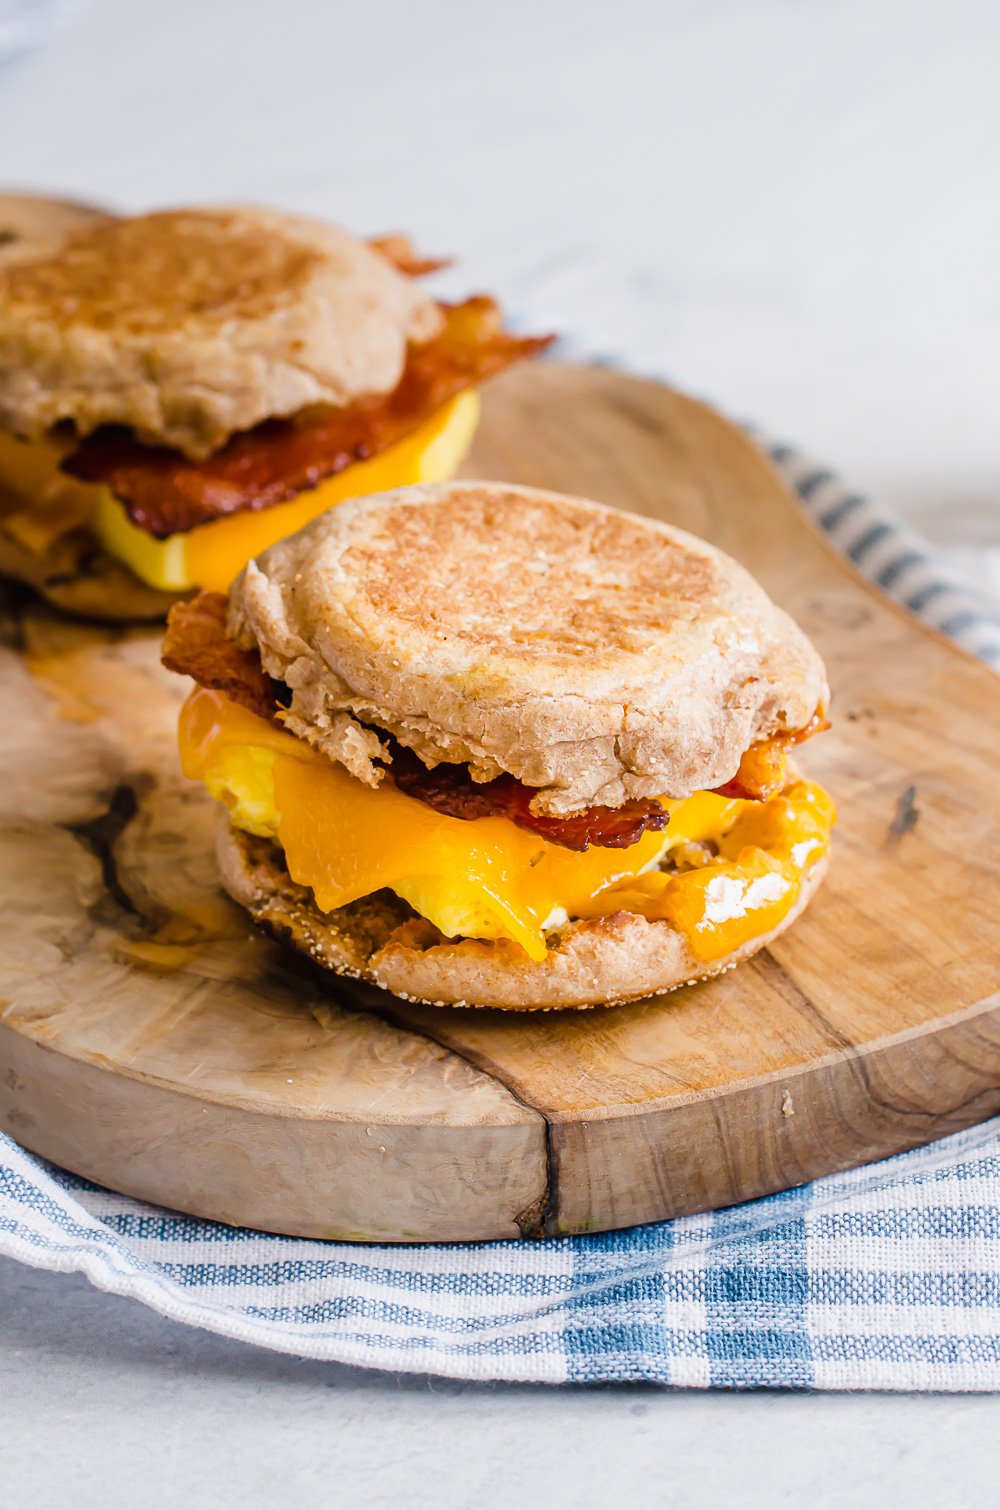 https://thrivinghomeblog.com/wp-content/uploads/2015/07/breakfast-sandwiches-7-1.jpg